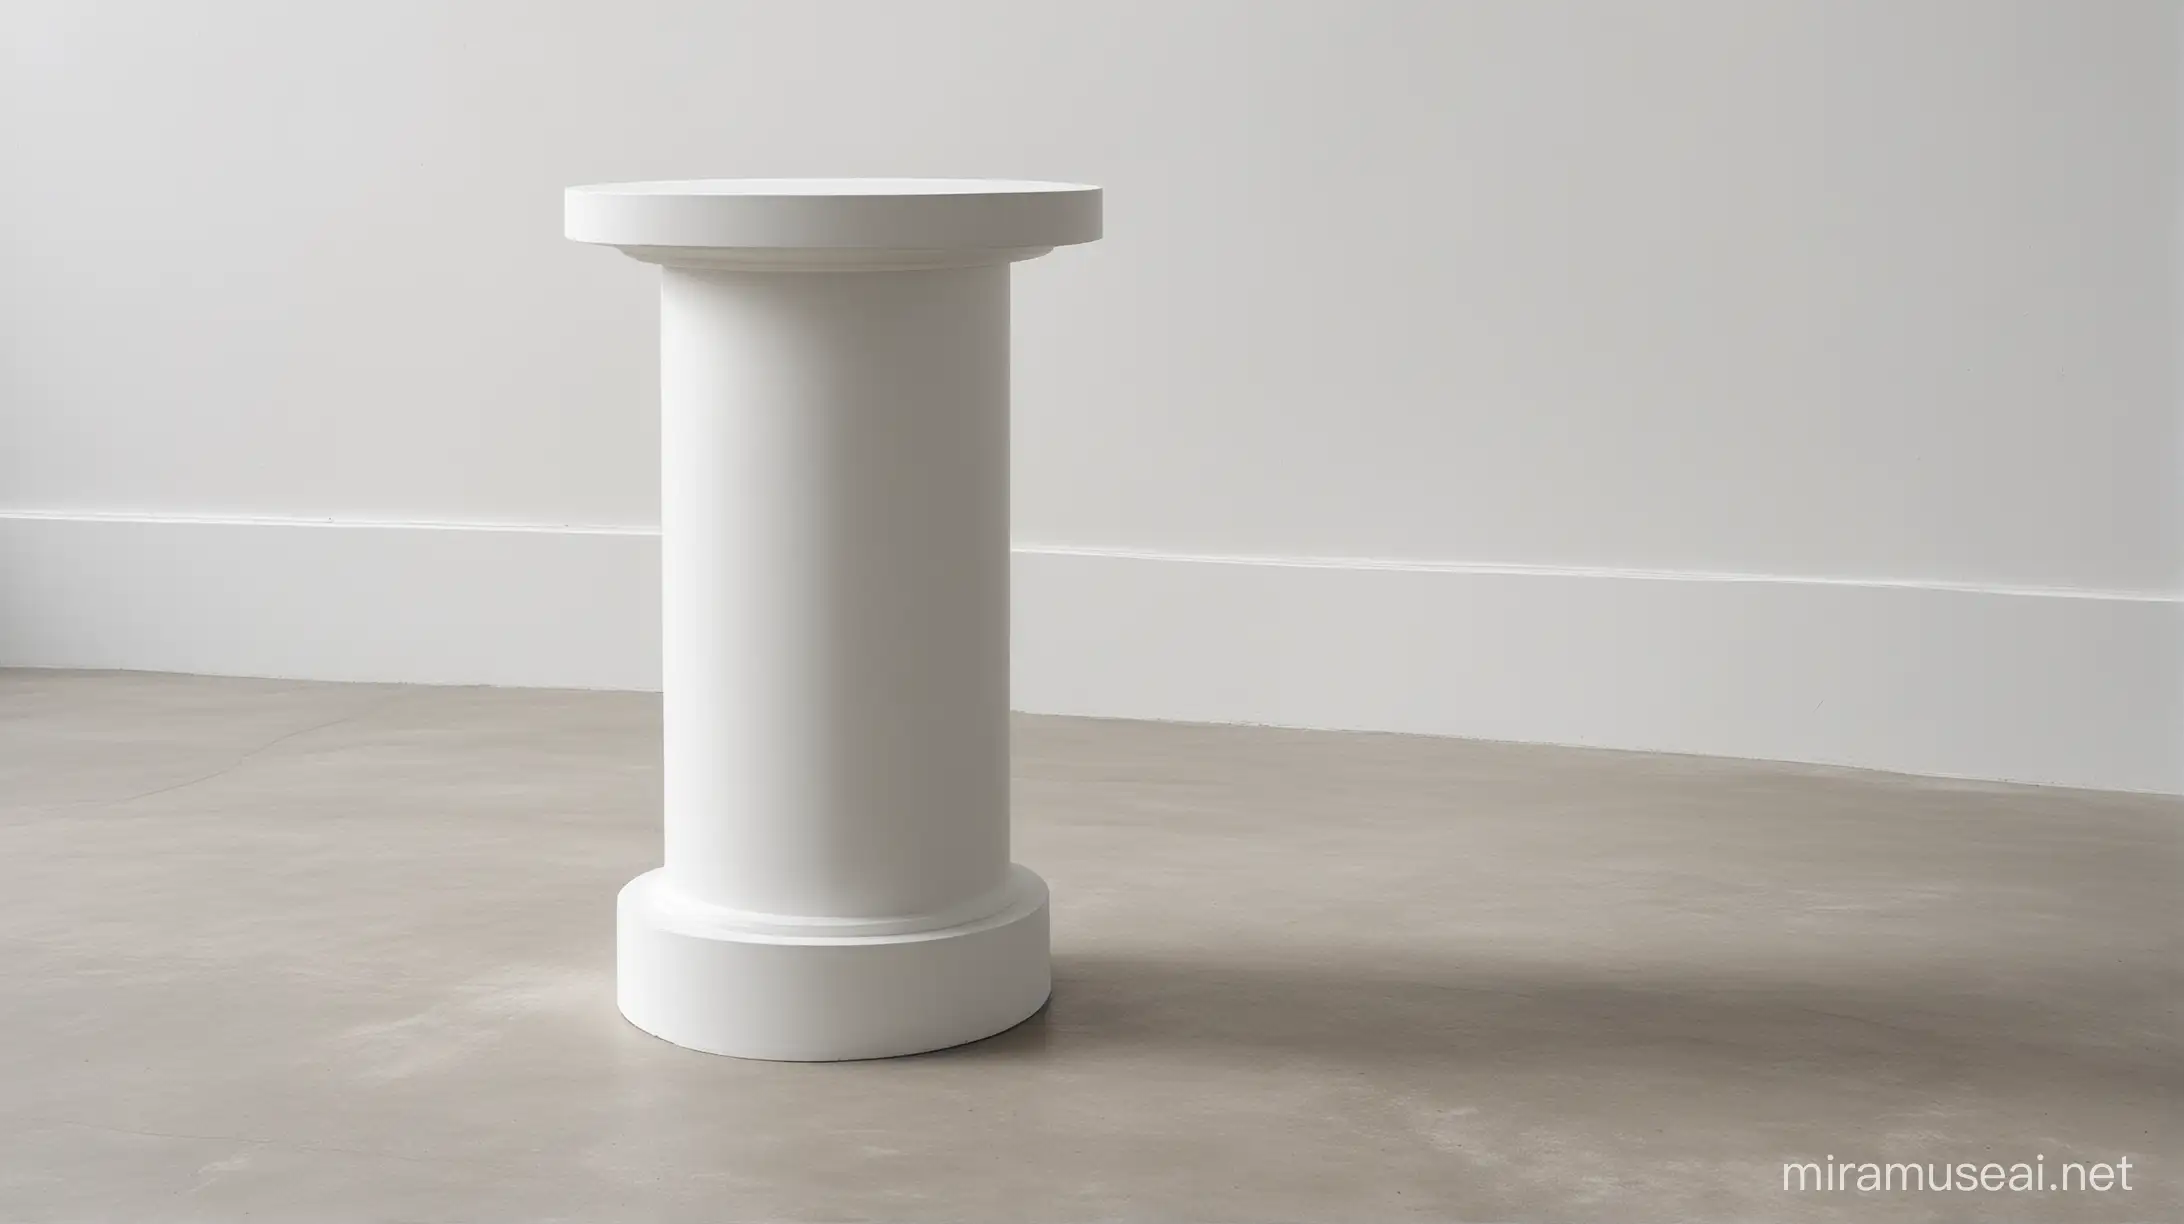 CloseUp White Pedestal in Minimalist White Gallery